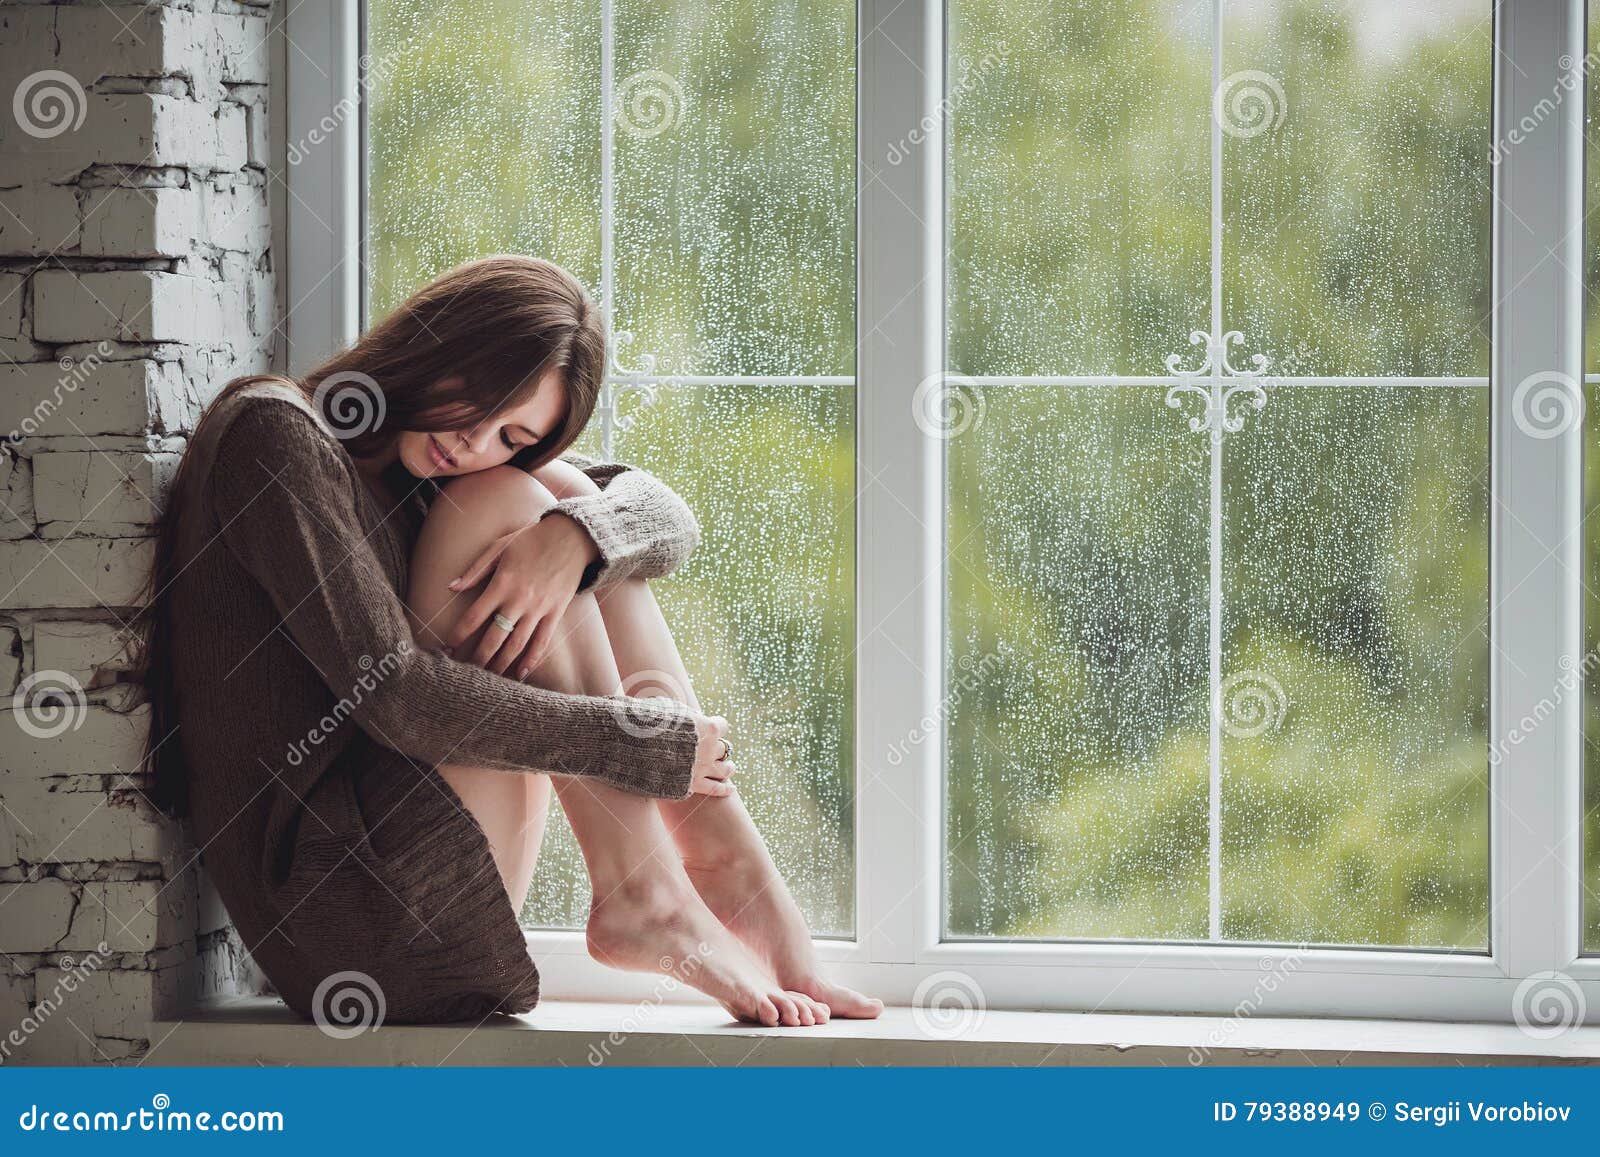 Beautiful Young Woman Sitting Alone Close To Window with Rain ...